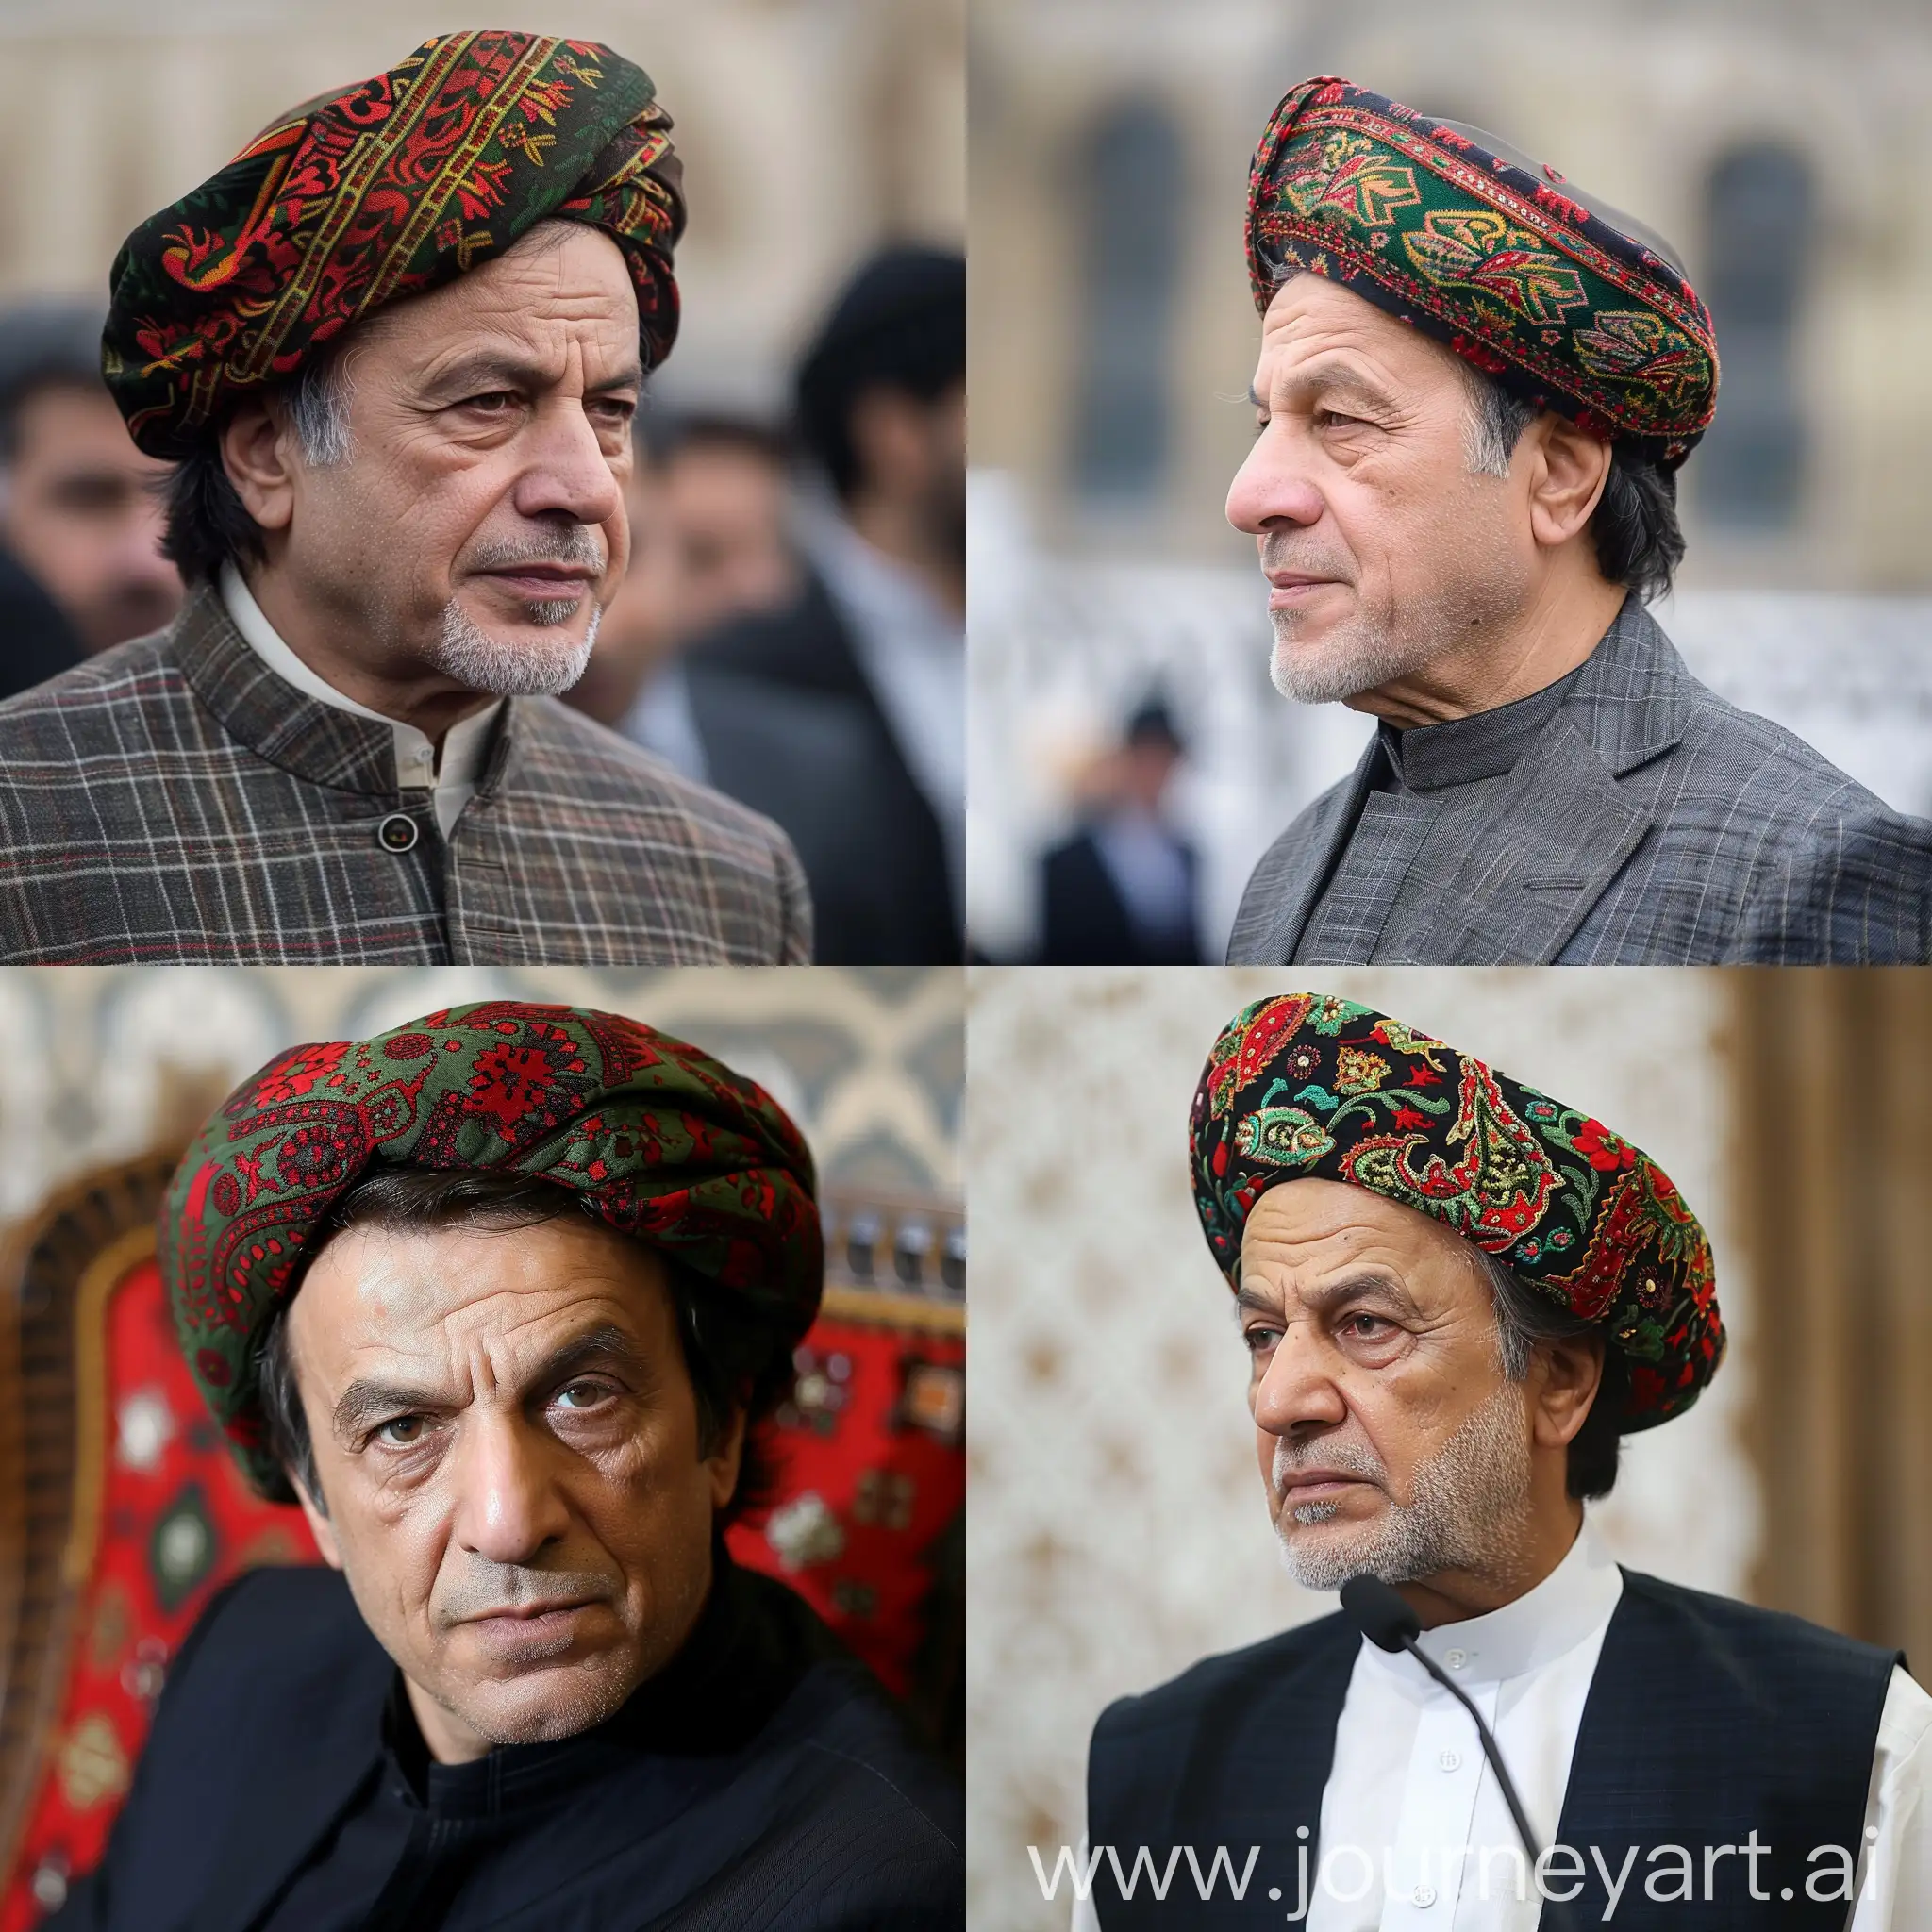 imran khan wearing a head cap